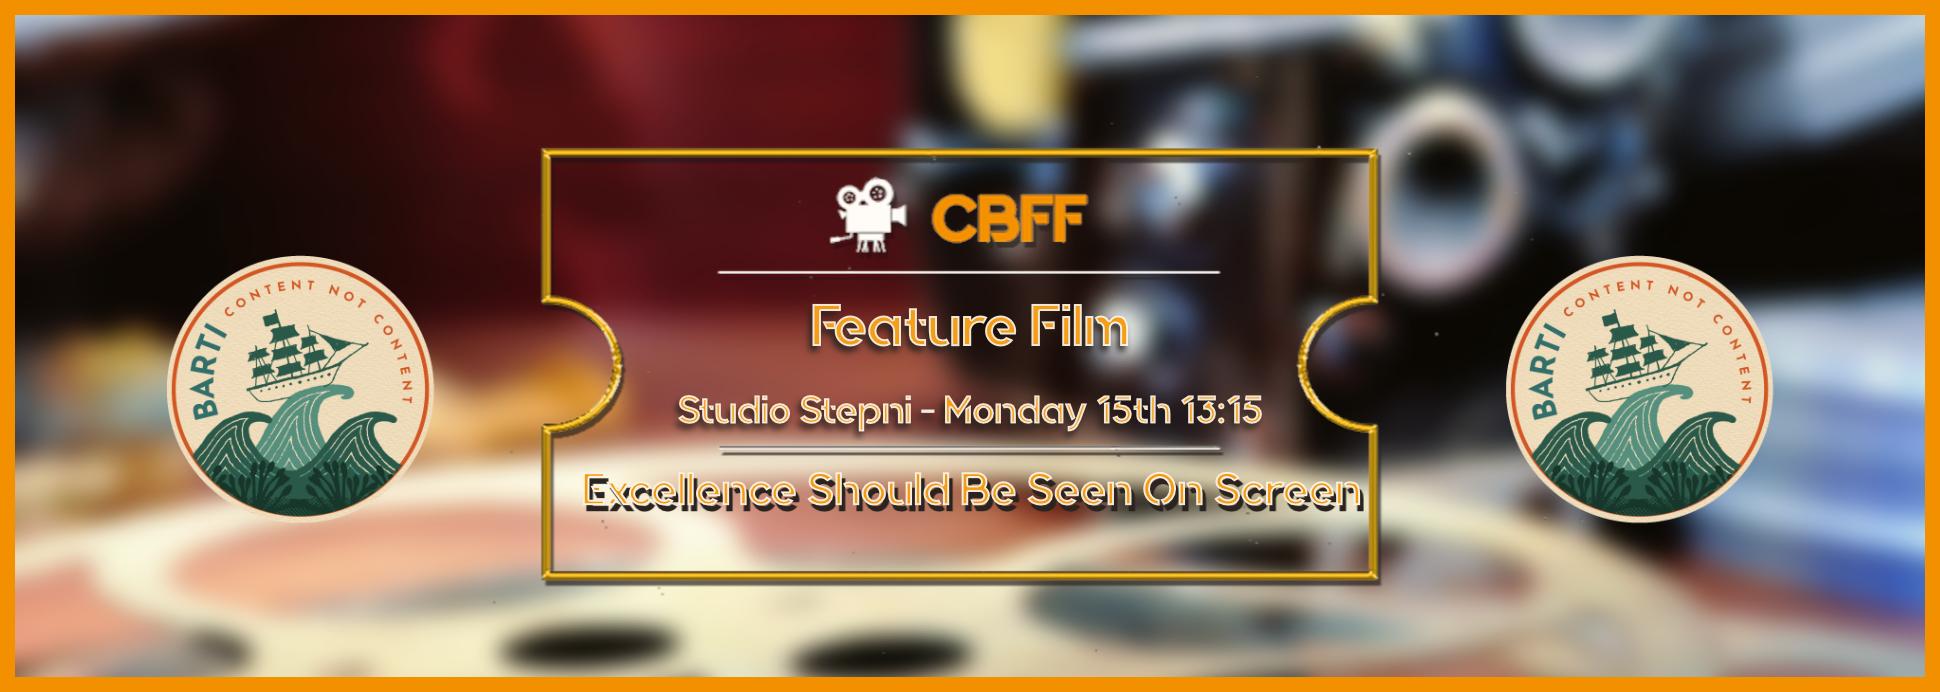 Studio Stepni Feature Film 15th 13:15